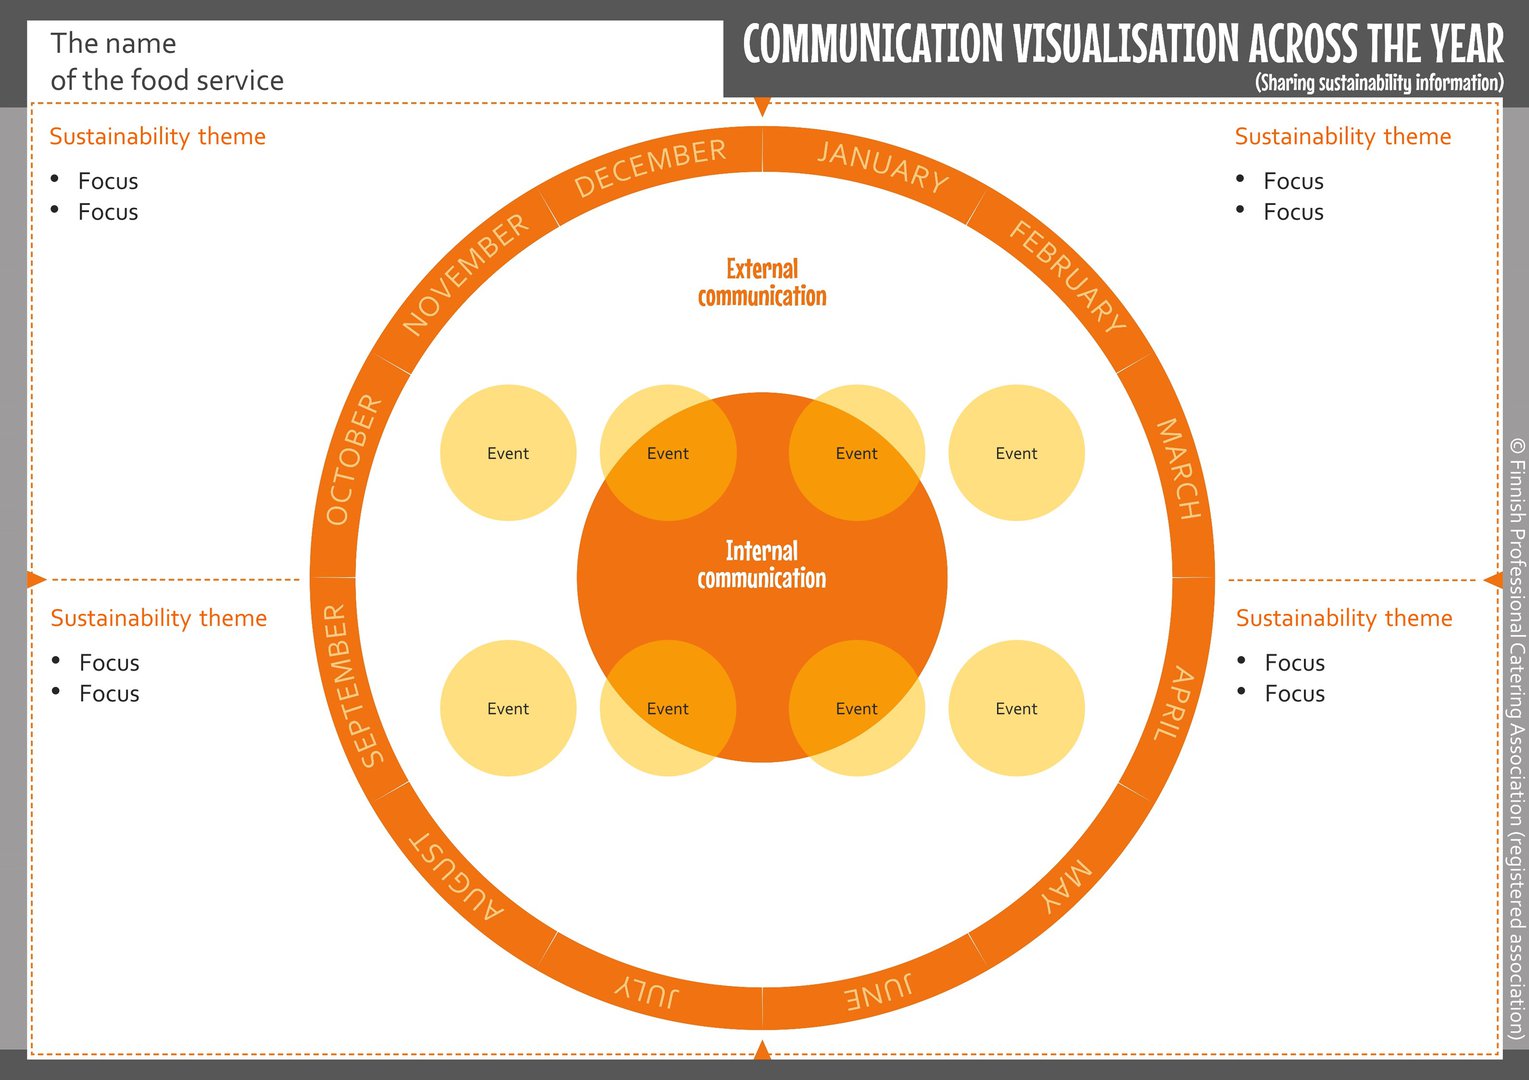 Sustainability communication across the year